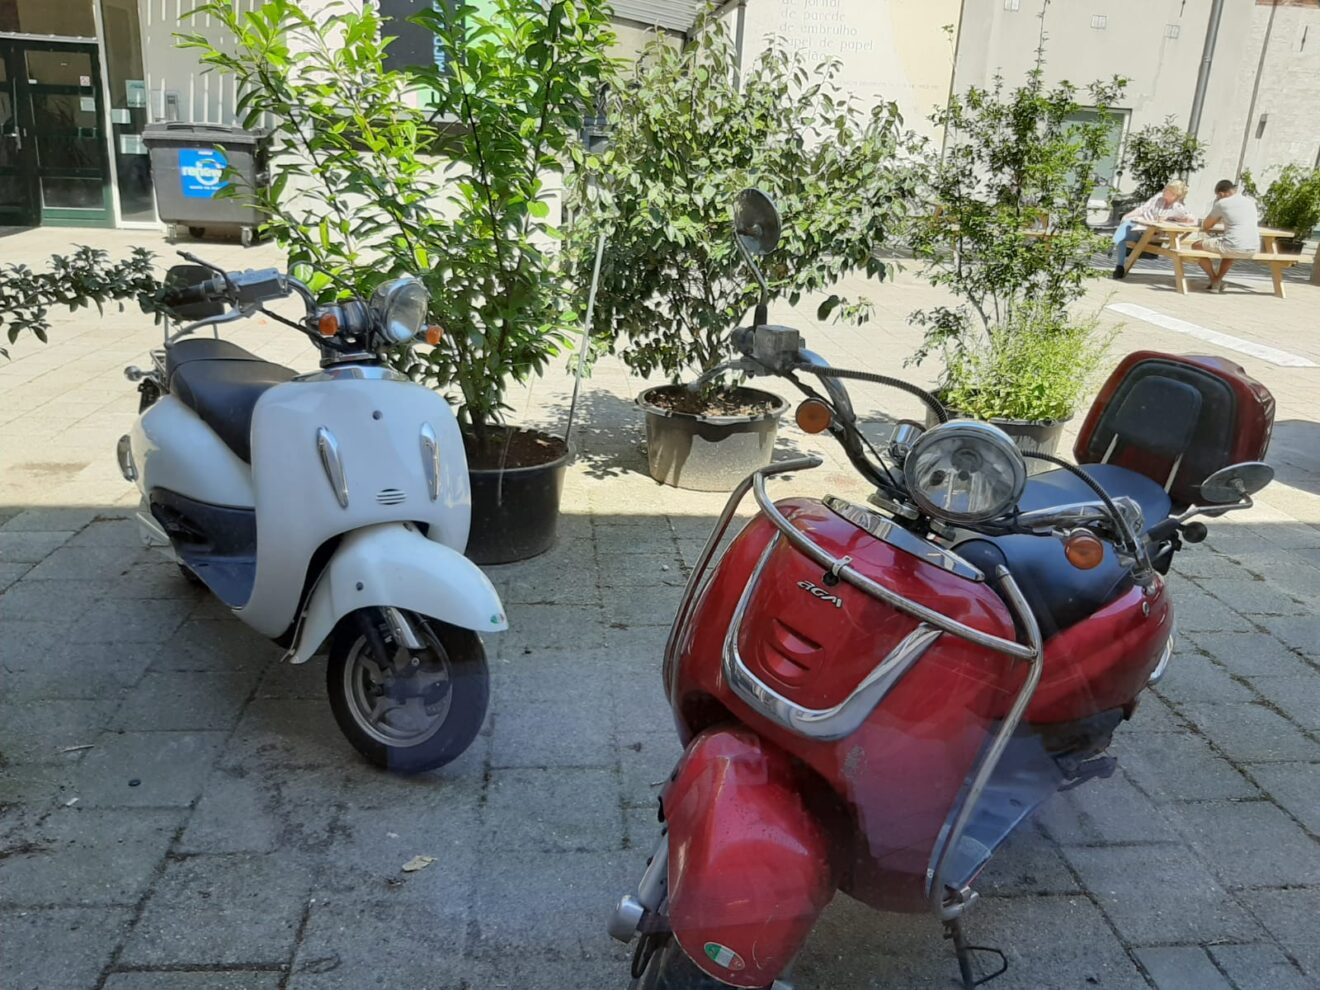 Opvallende toename scooter- en brommerdiefstal in Leiden-Noord